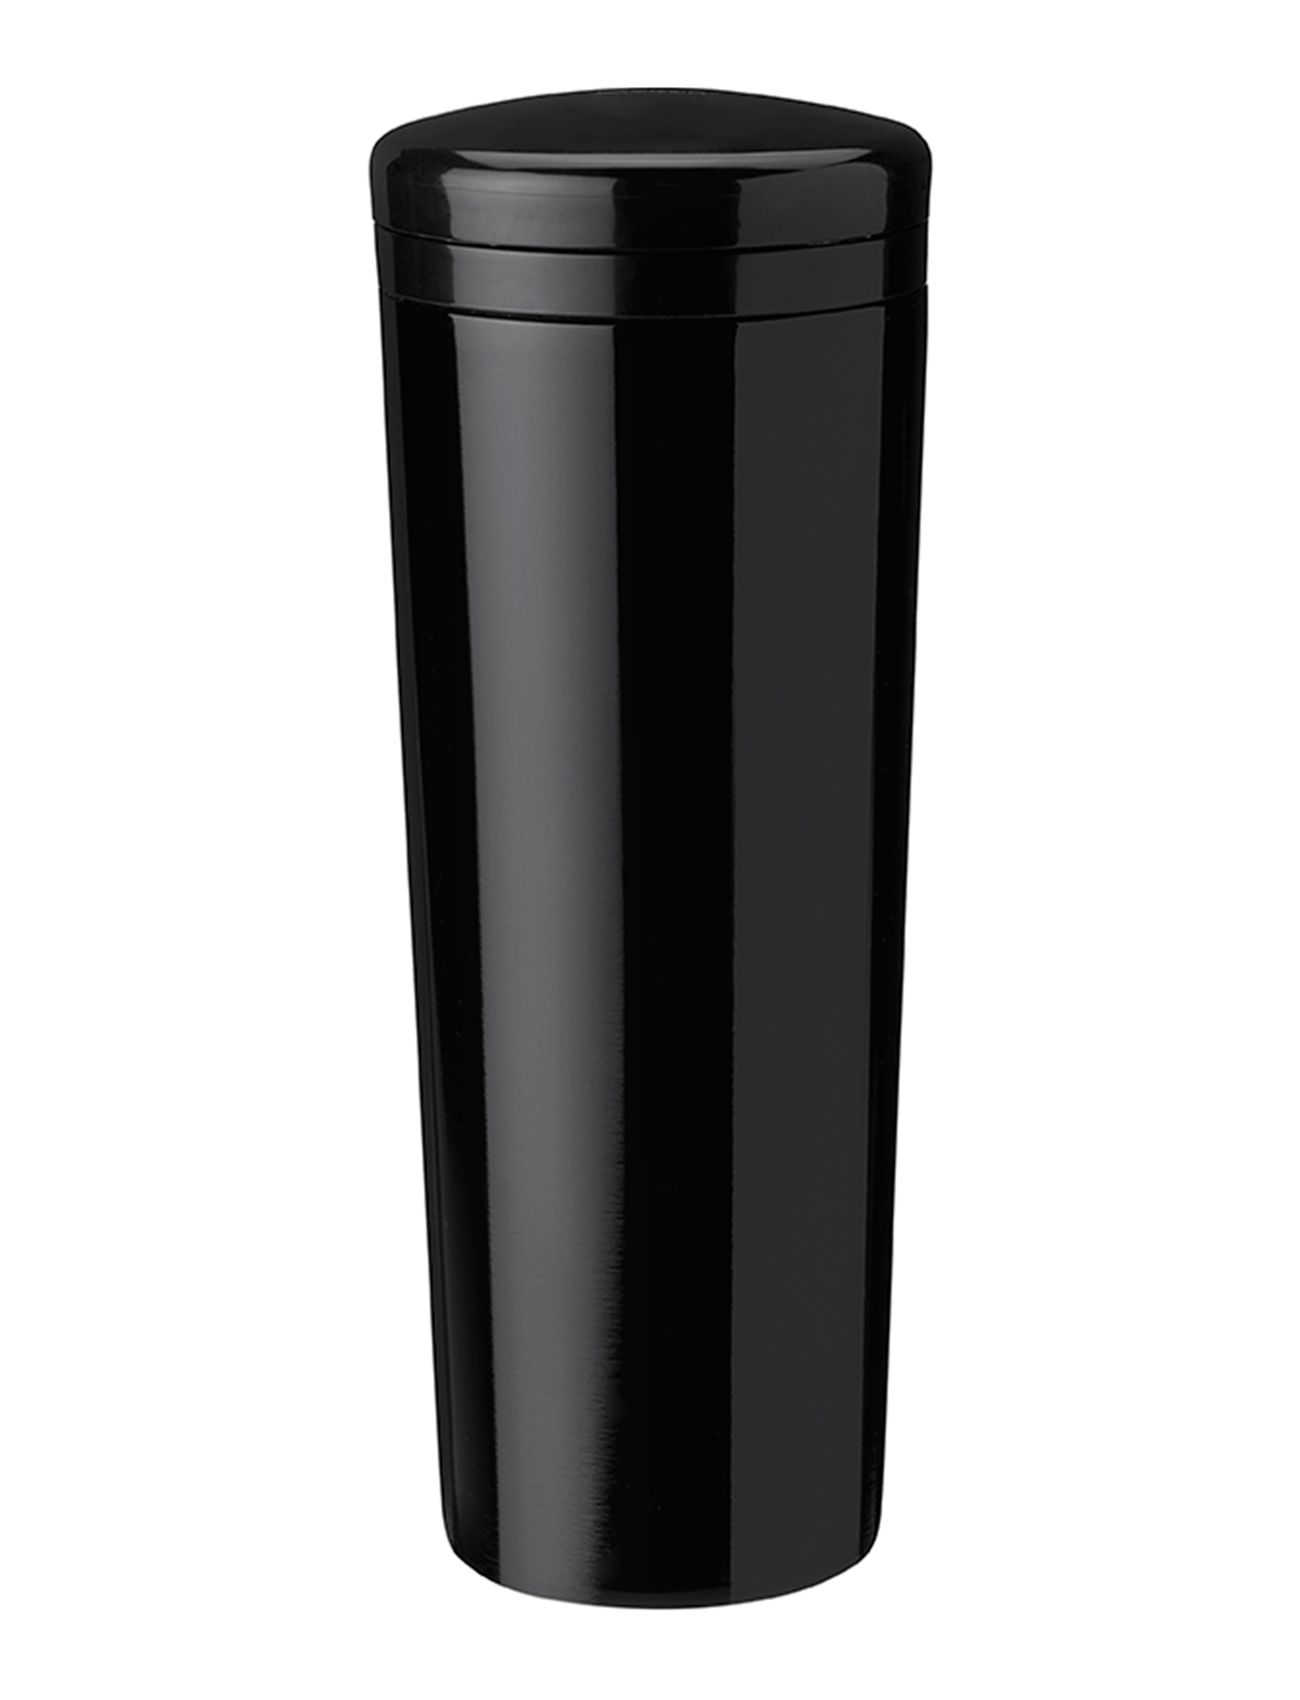 Carrie Termoflaske 0.5 L. Black Home Tableware Cups & Mugs Thermal Cups Black Stelton